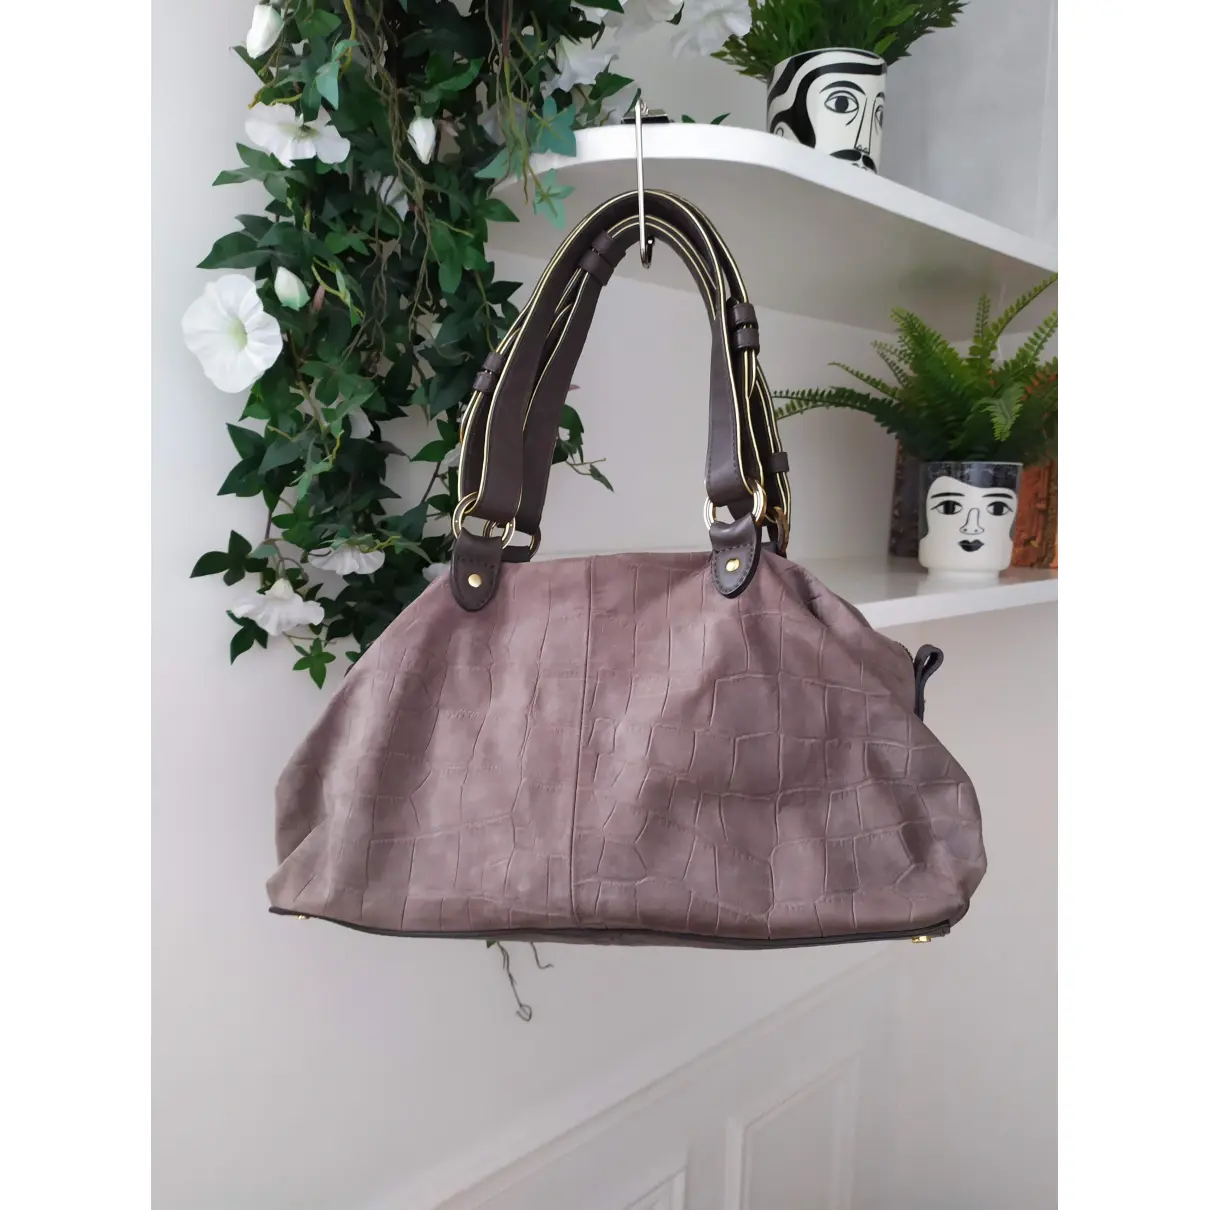 Buy SEQUOIA Leather handbag online